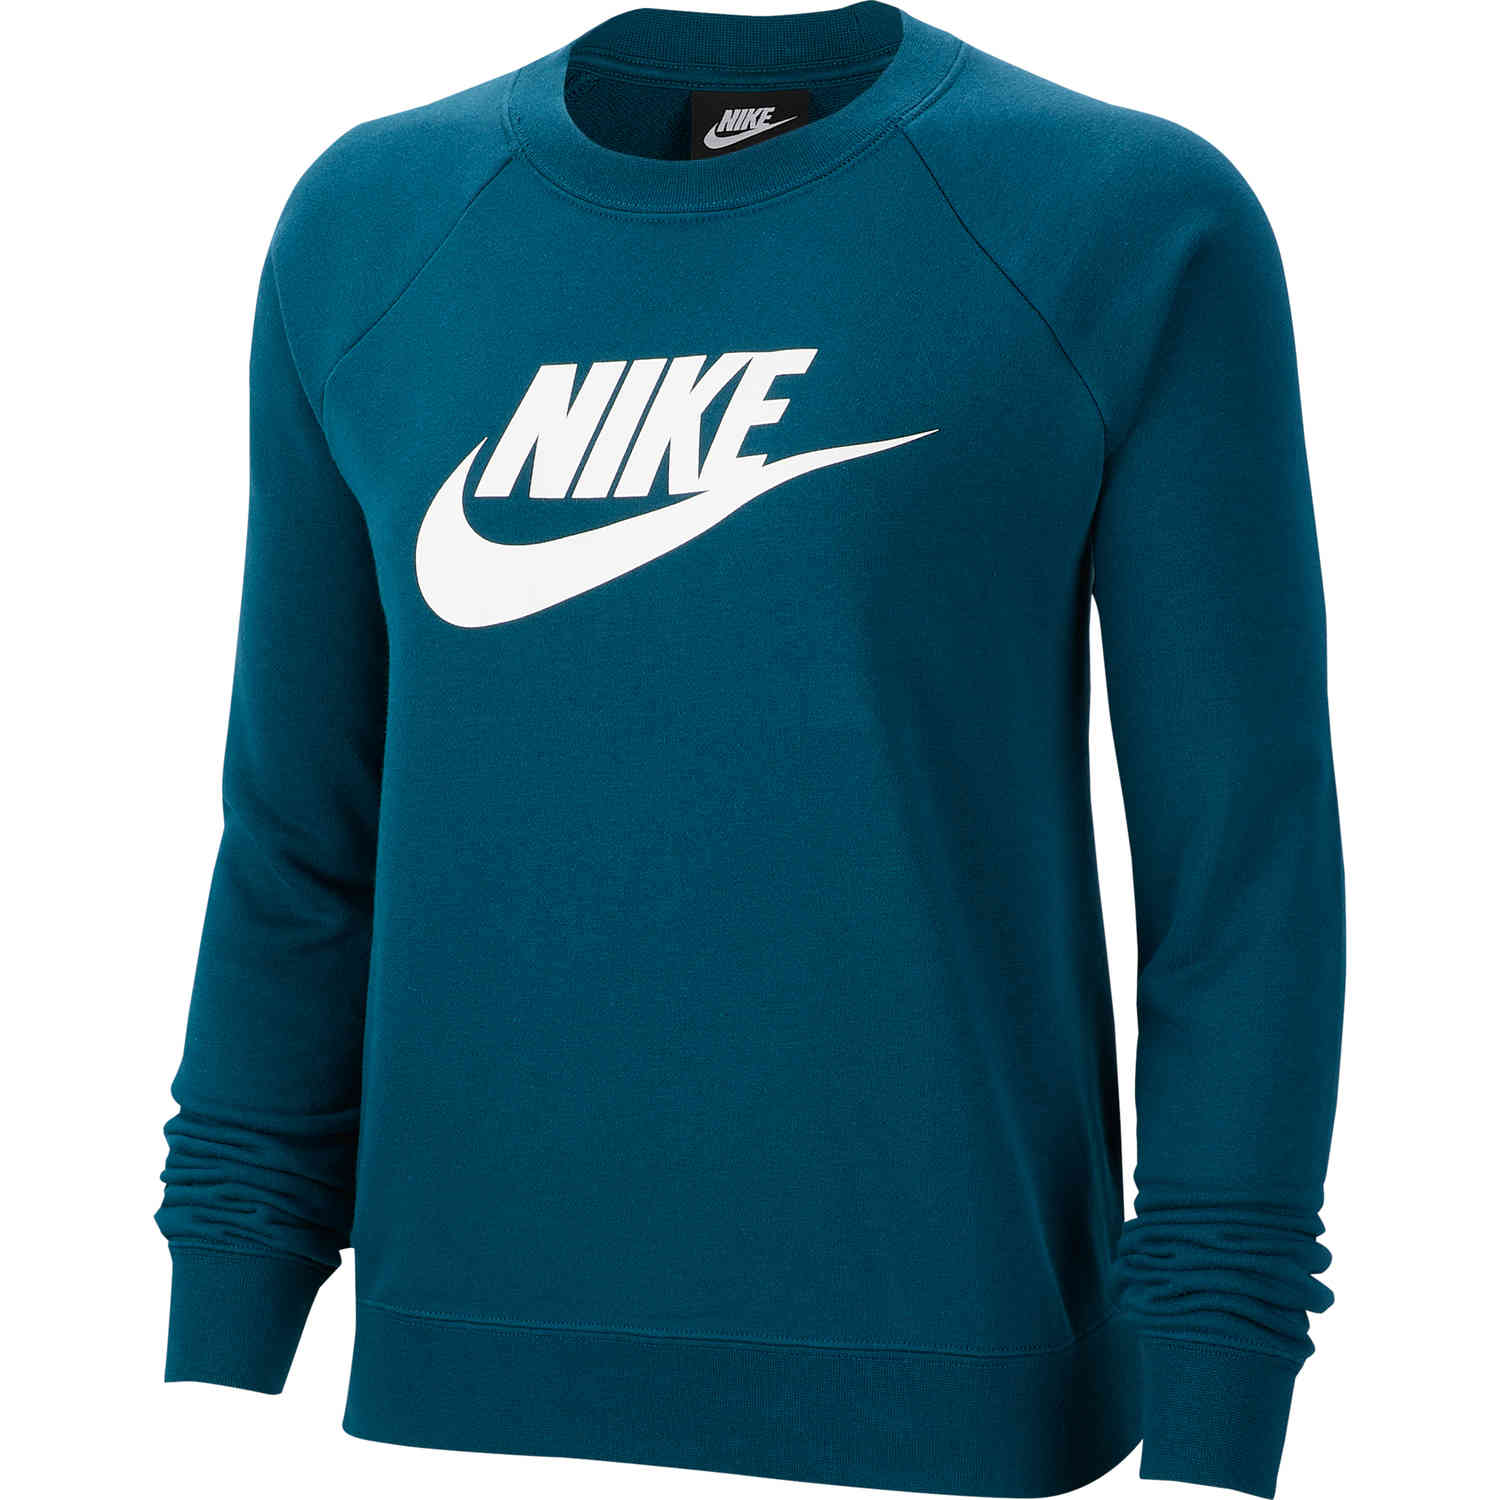 Nike Elite WarmUp Jacket - Soccer Master